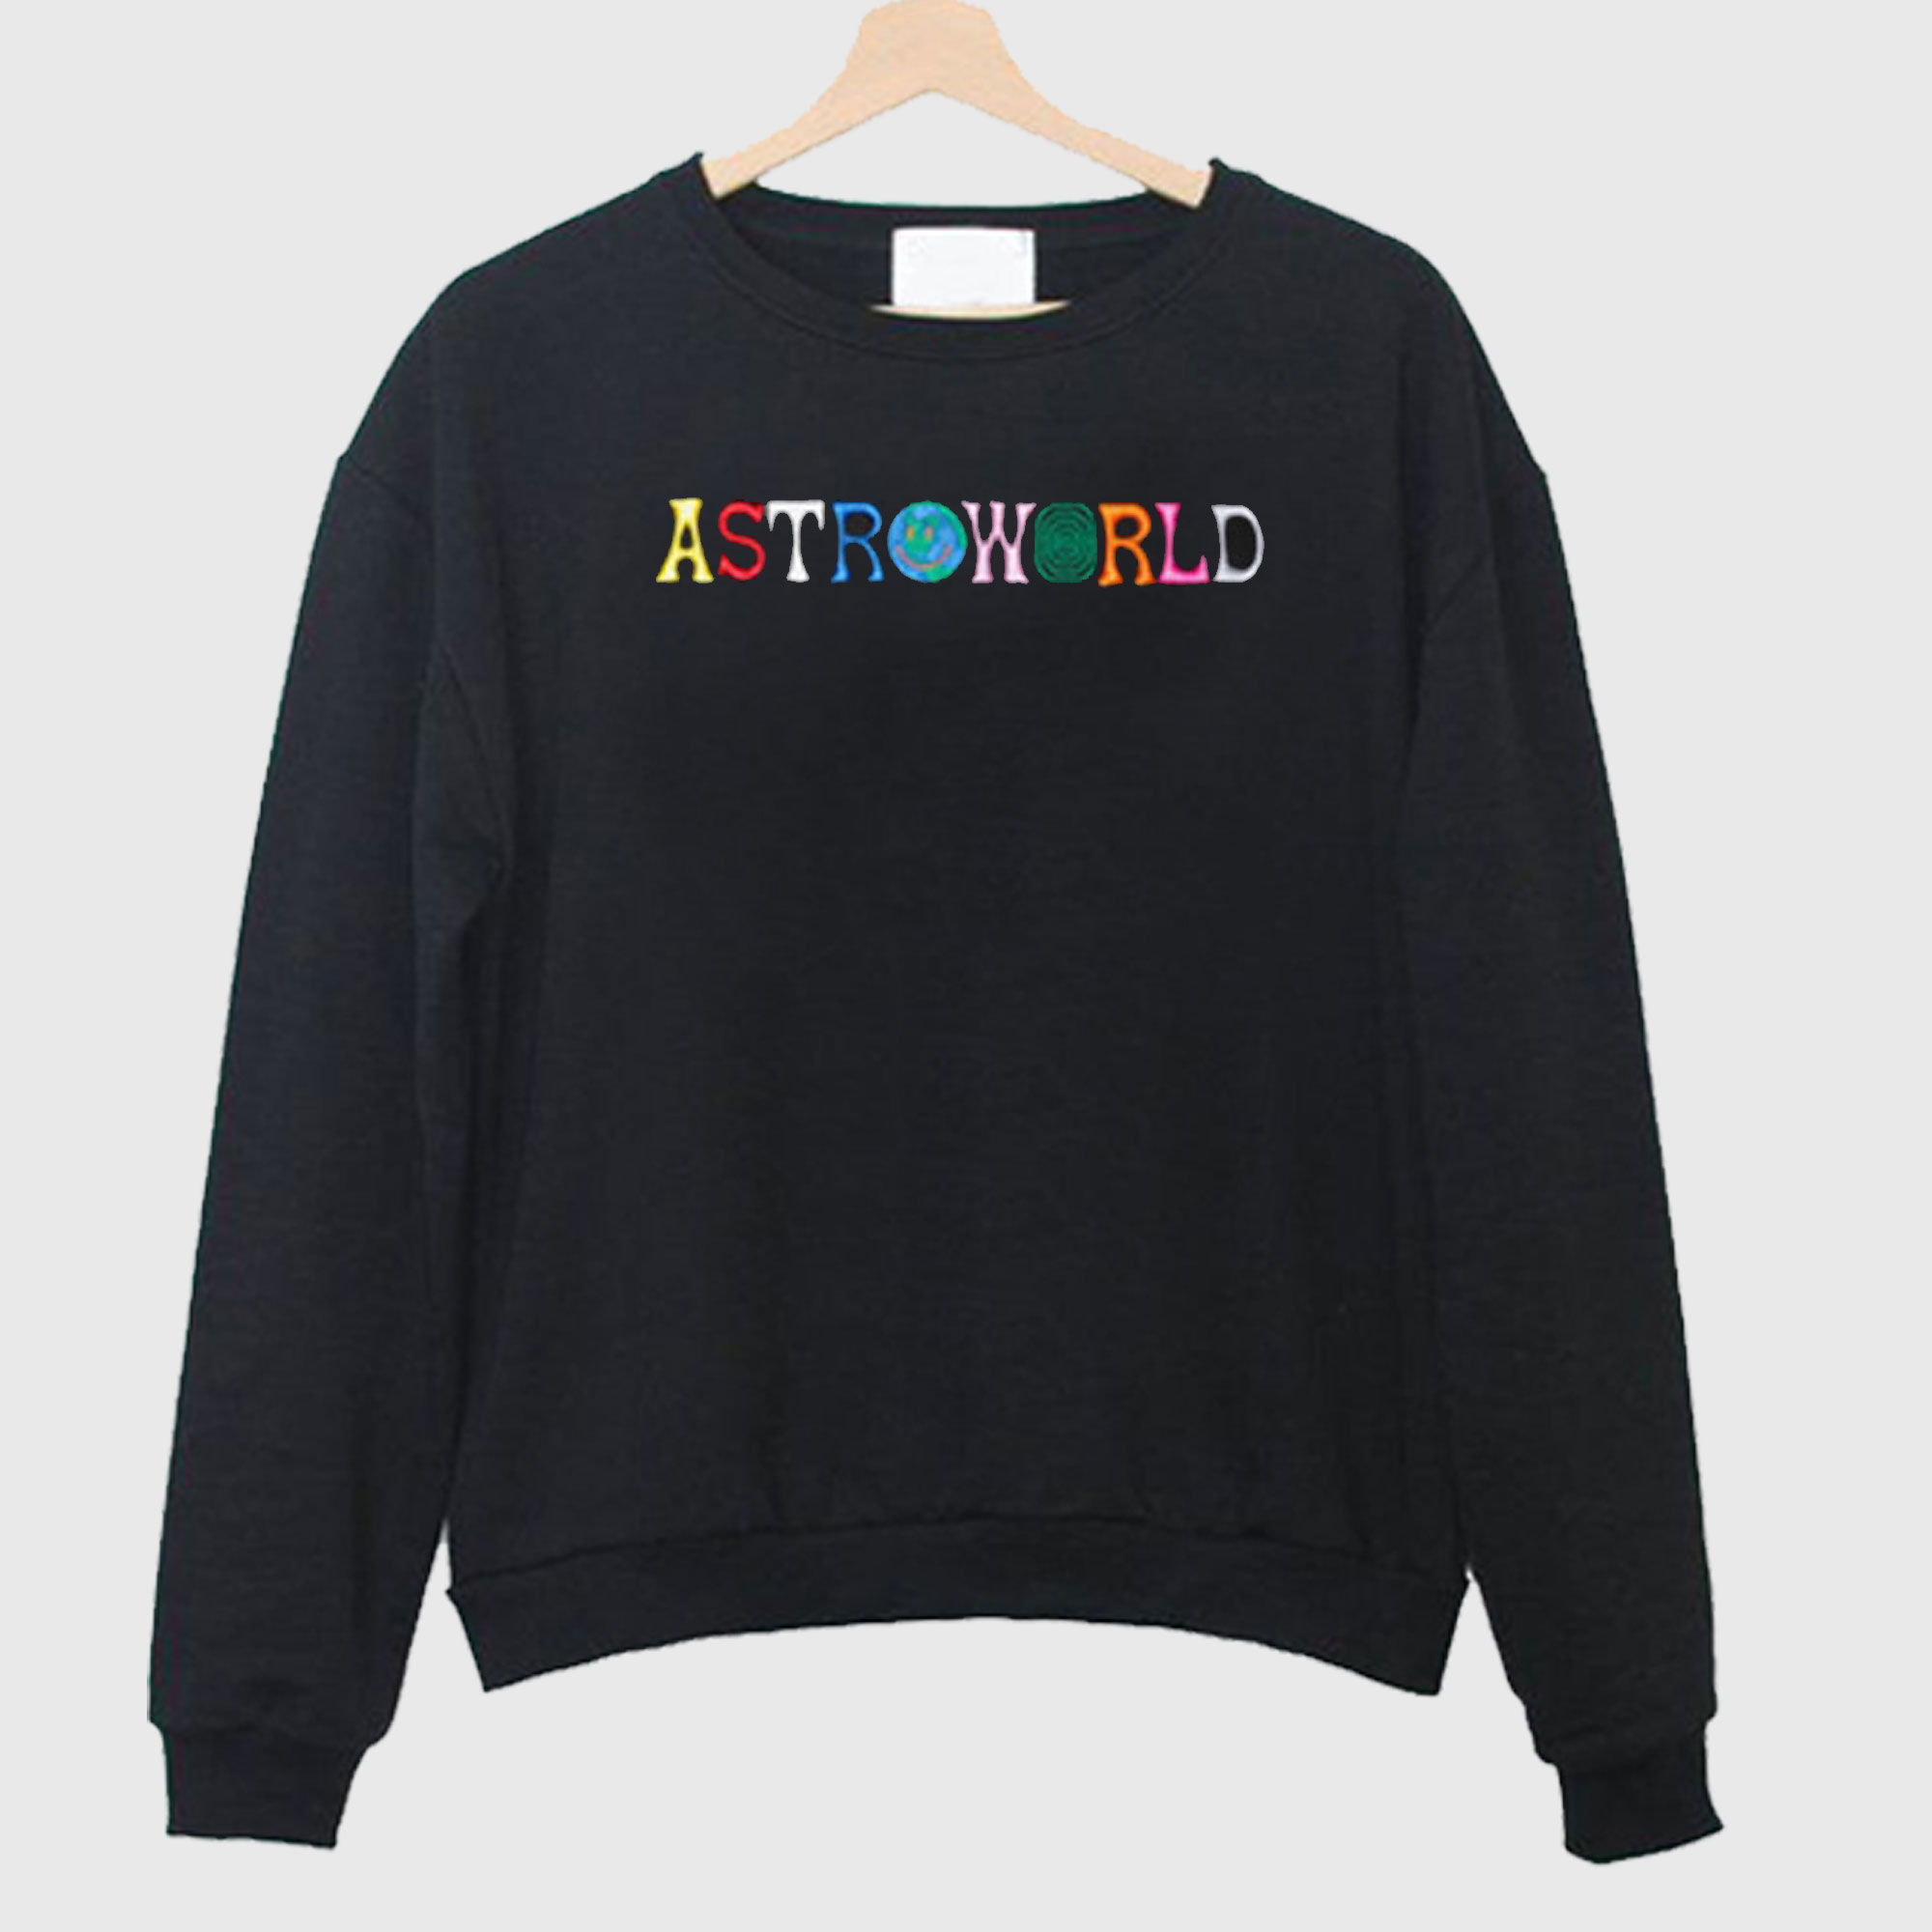 astroworld sweatshirt